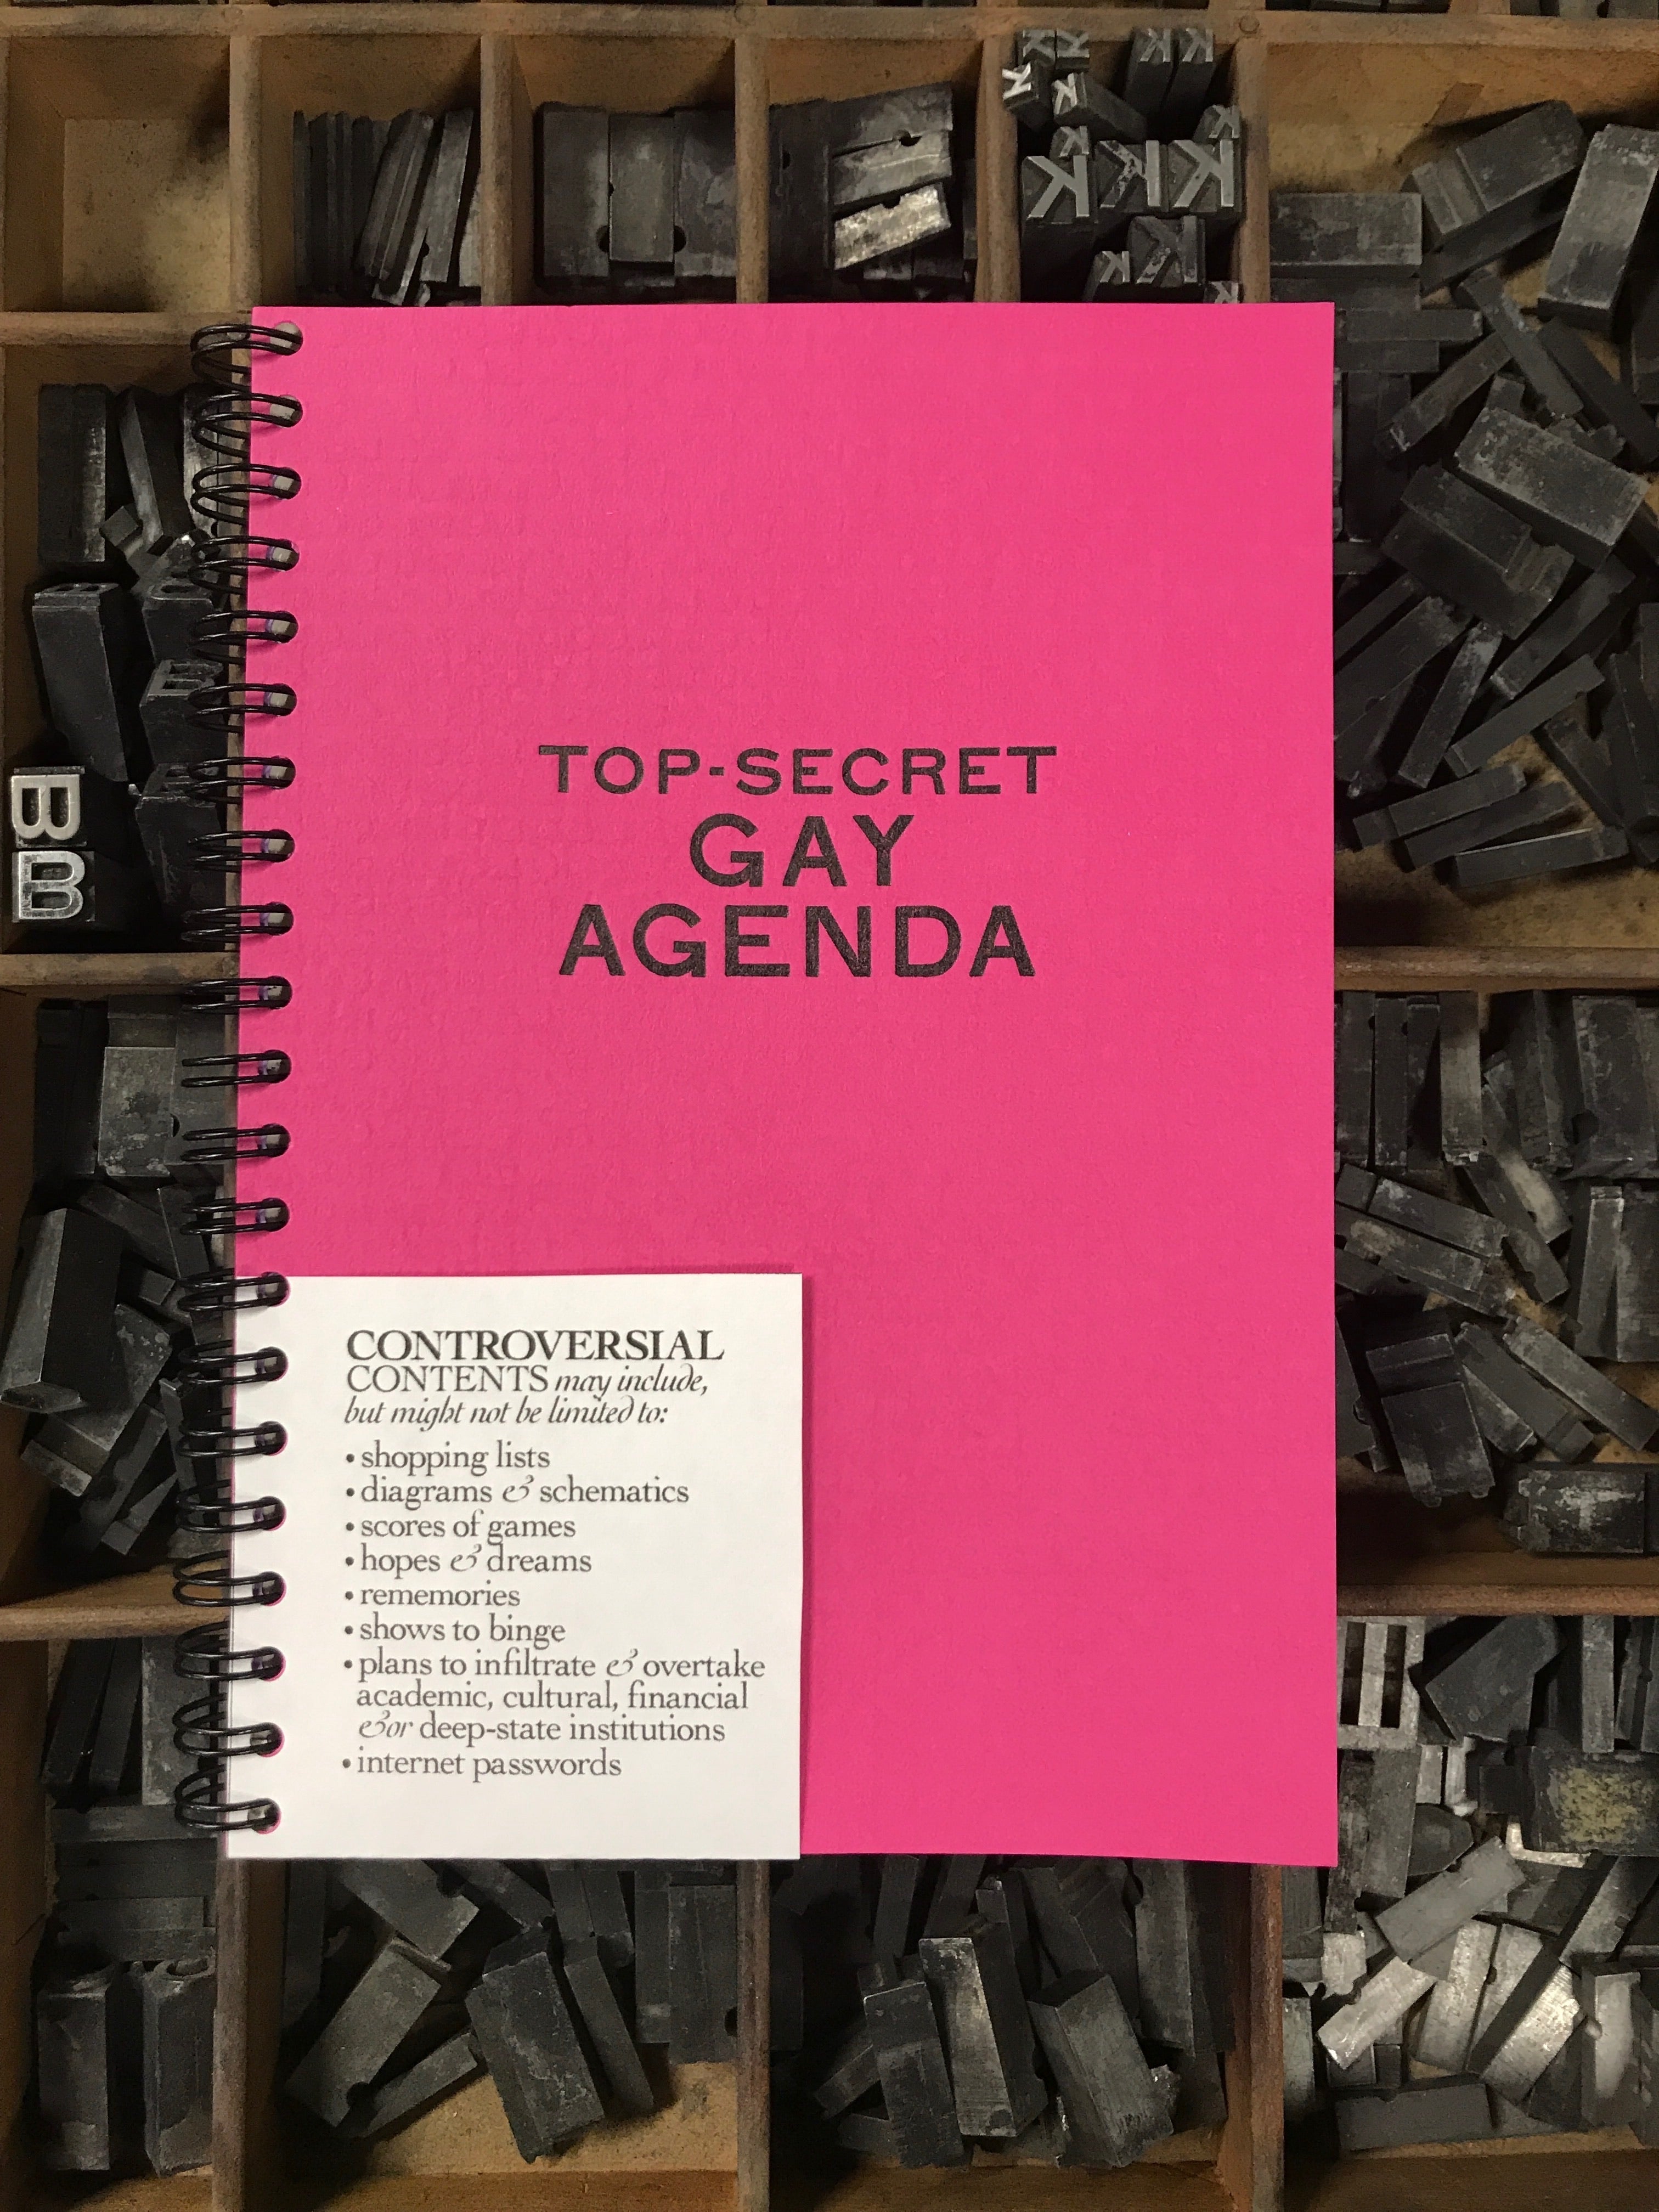 Top-Secret GAY AGENDA Notebook Made by Lunalux